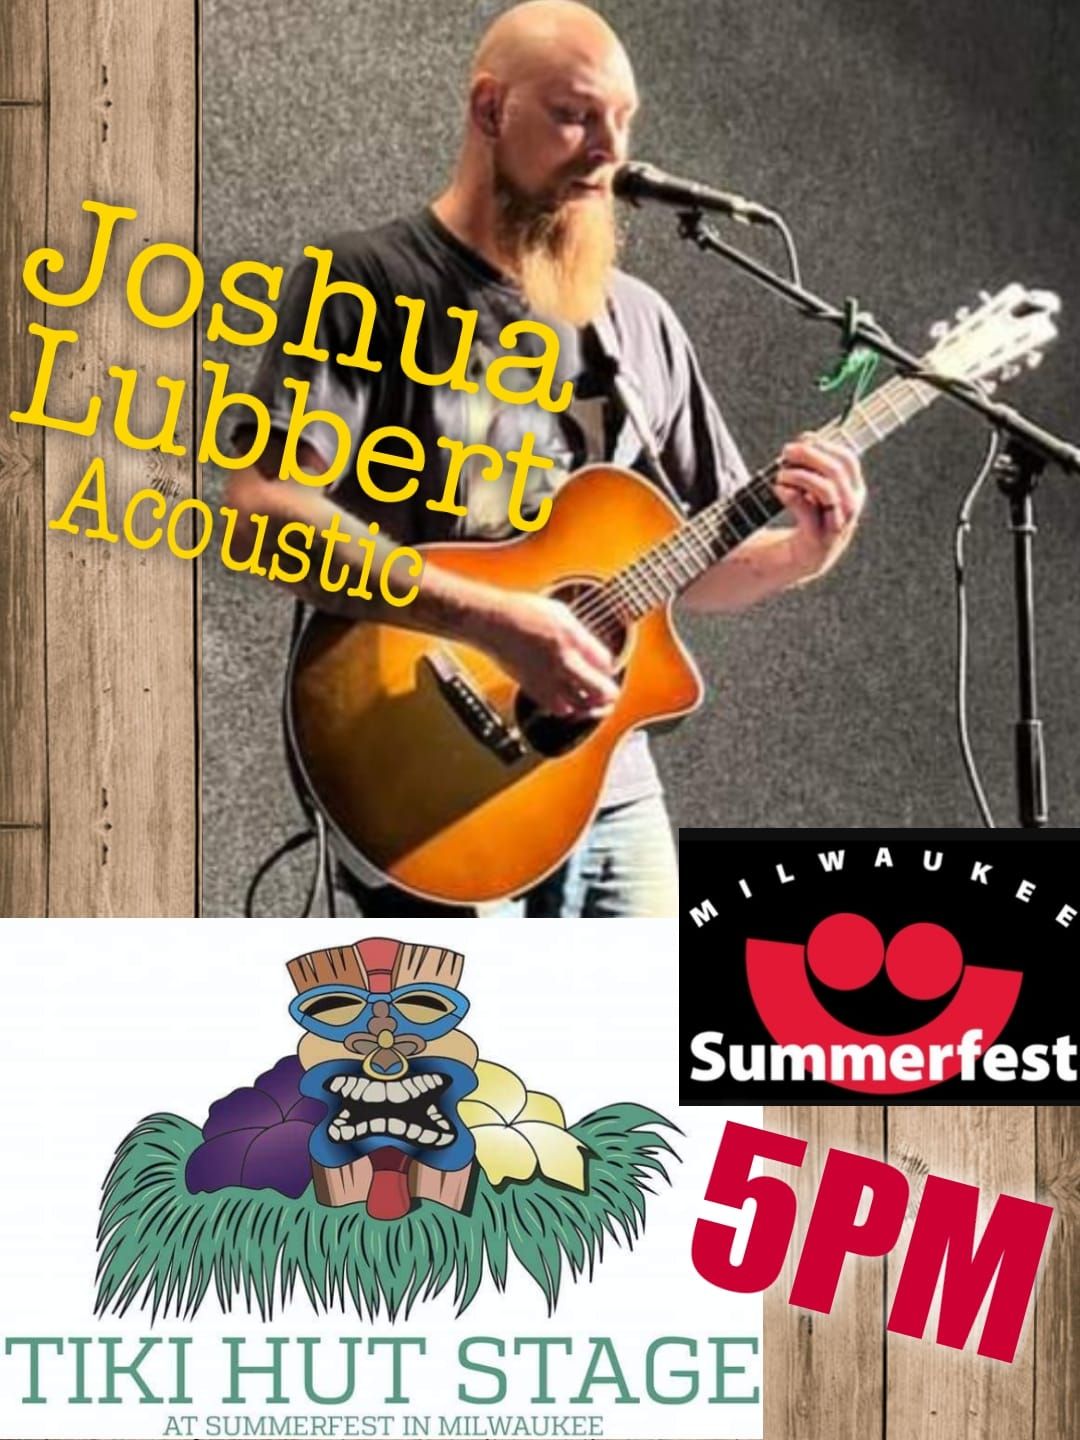 Joshua Lubbert Acoustic LIVE at Summerfest Tiki Hut Stage